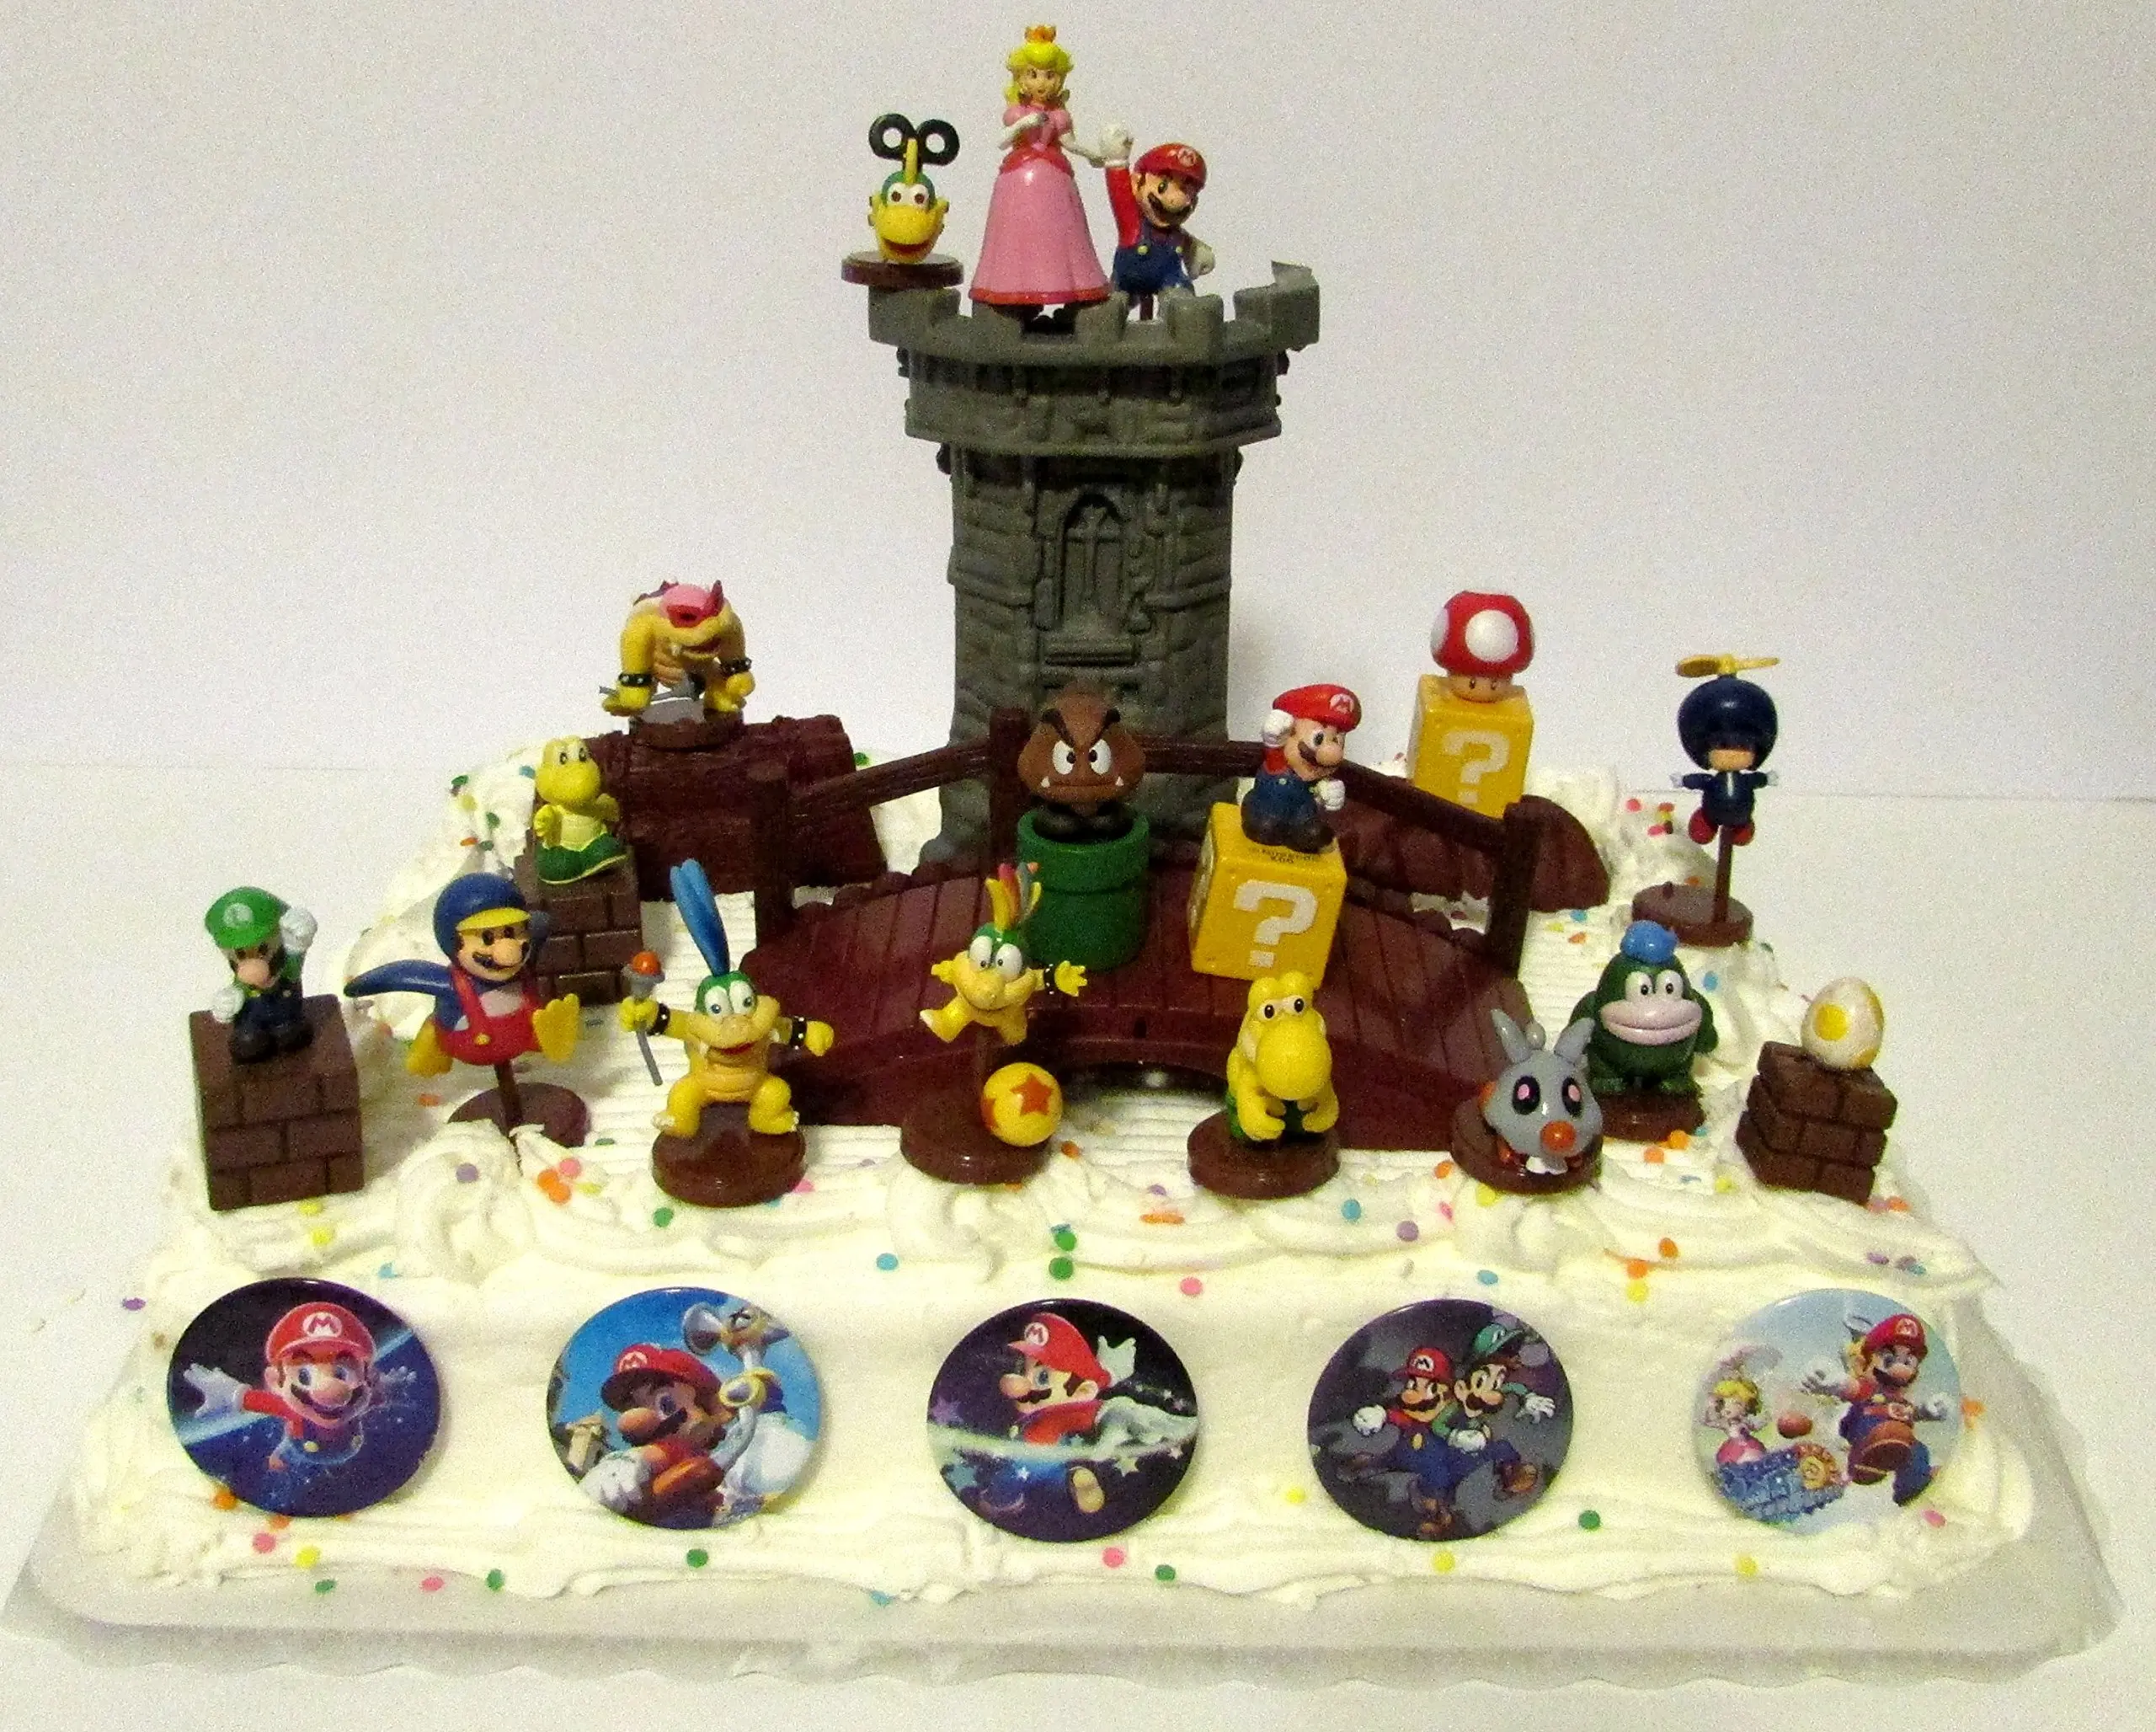 Cheap Super Mario Cake Decorations Find Super Mario Cake Decorations